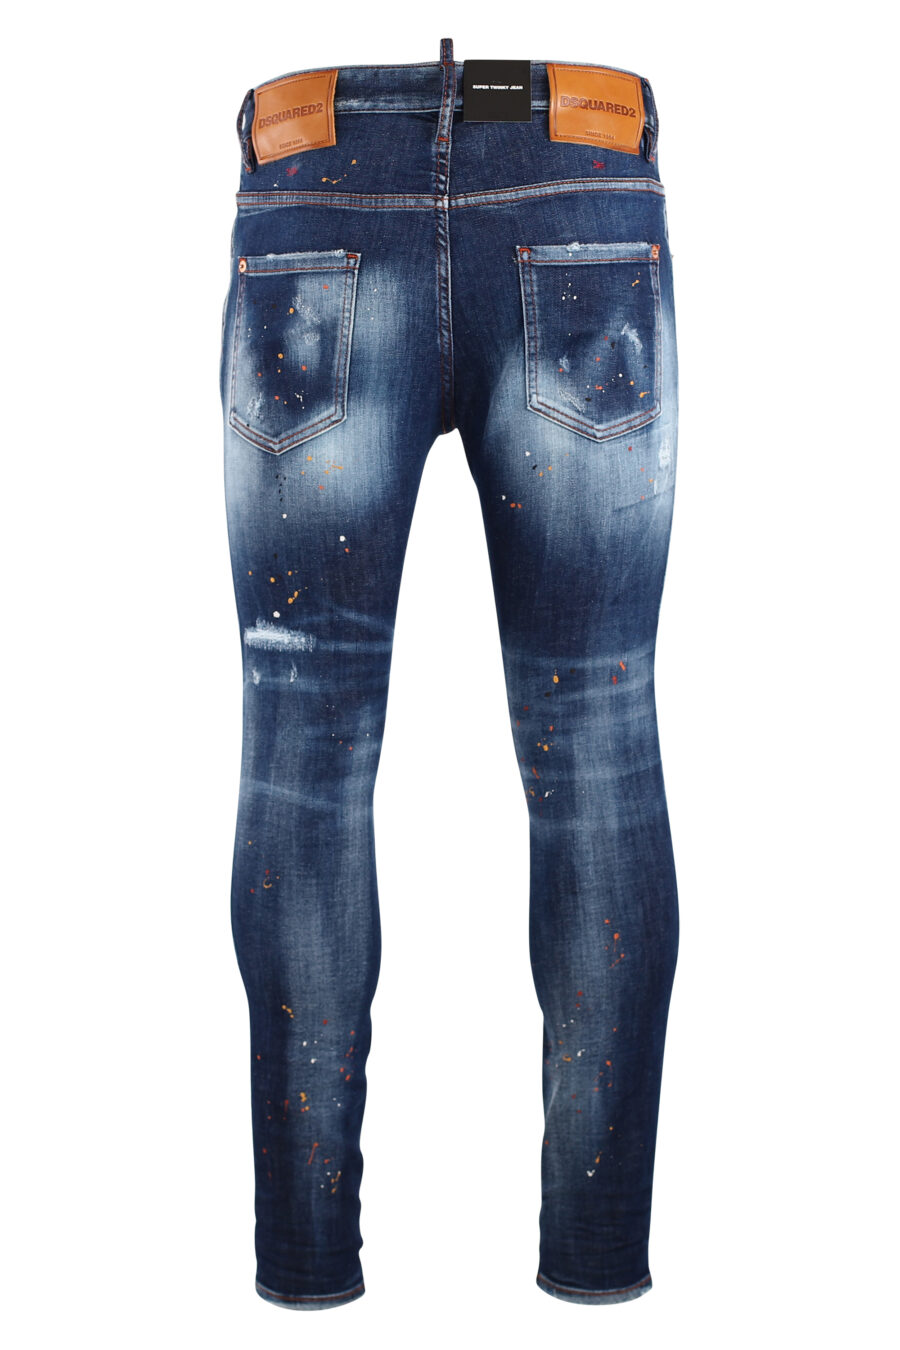 Super twinkie" blue frayed jeans - IMG 7539